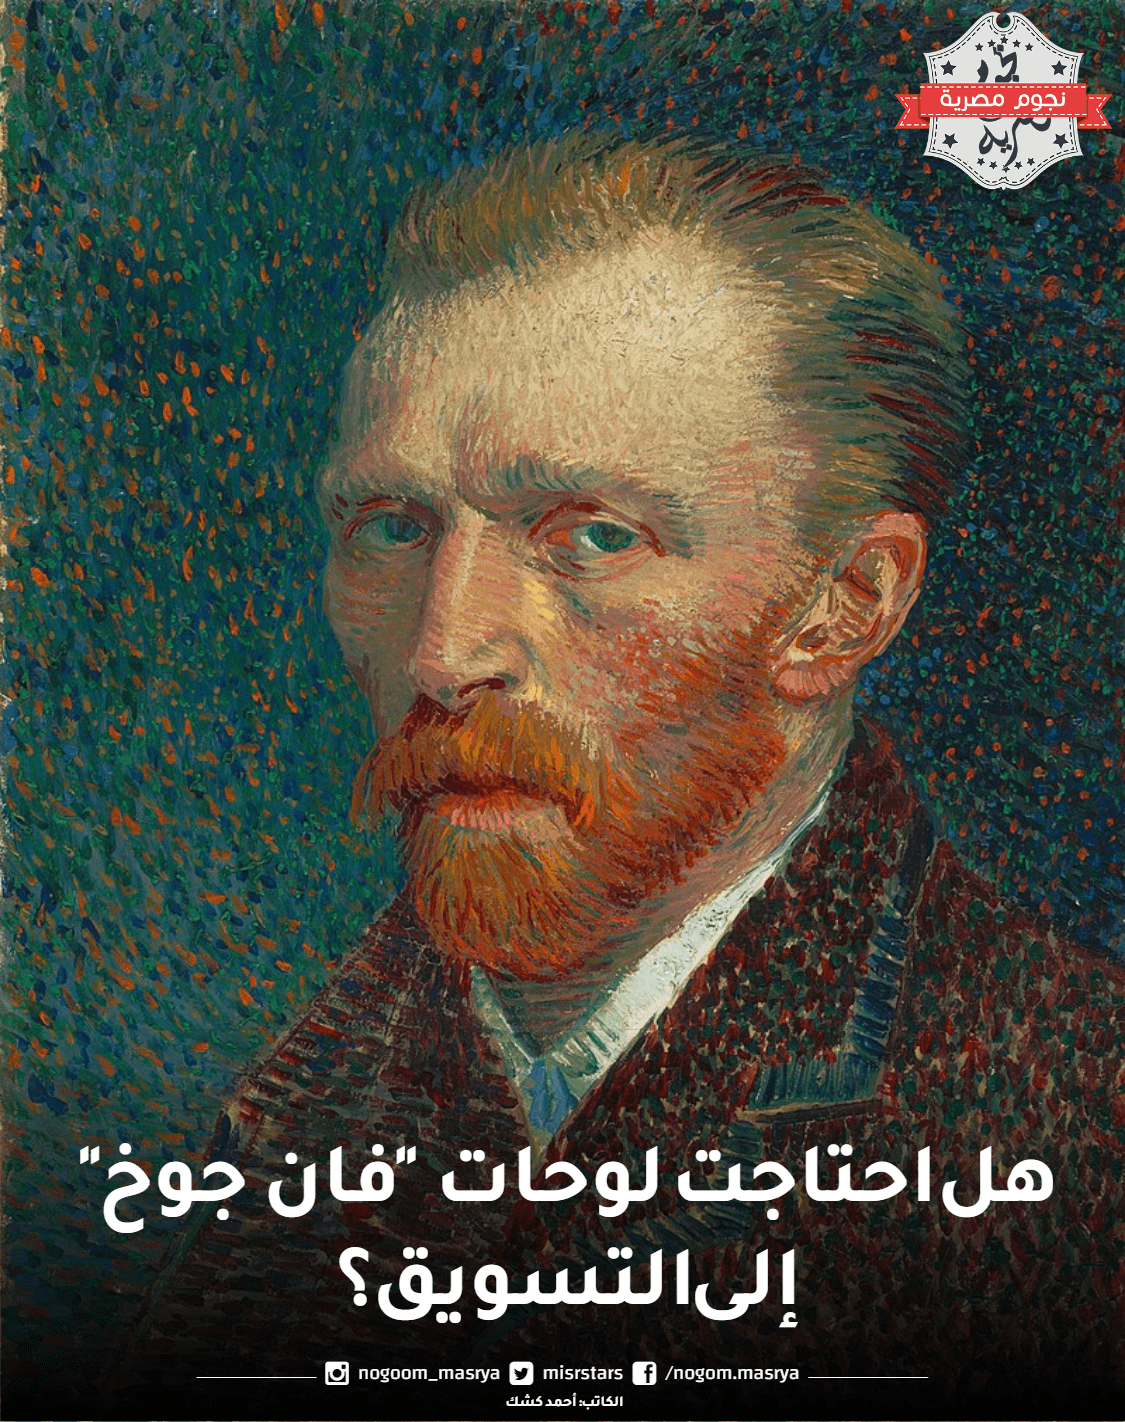 Do Van Gogh paintings need marketing?